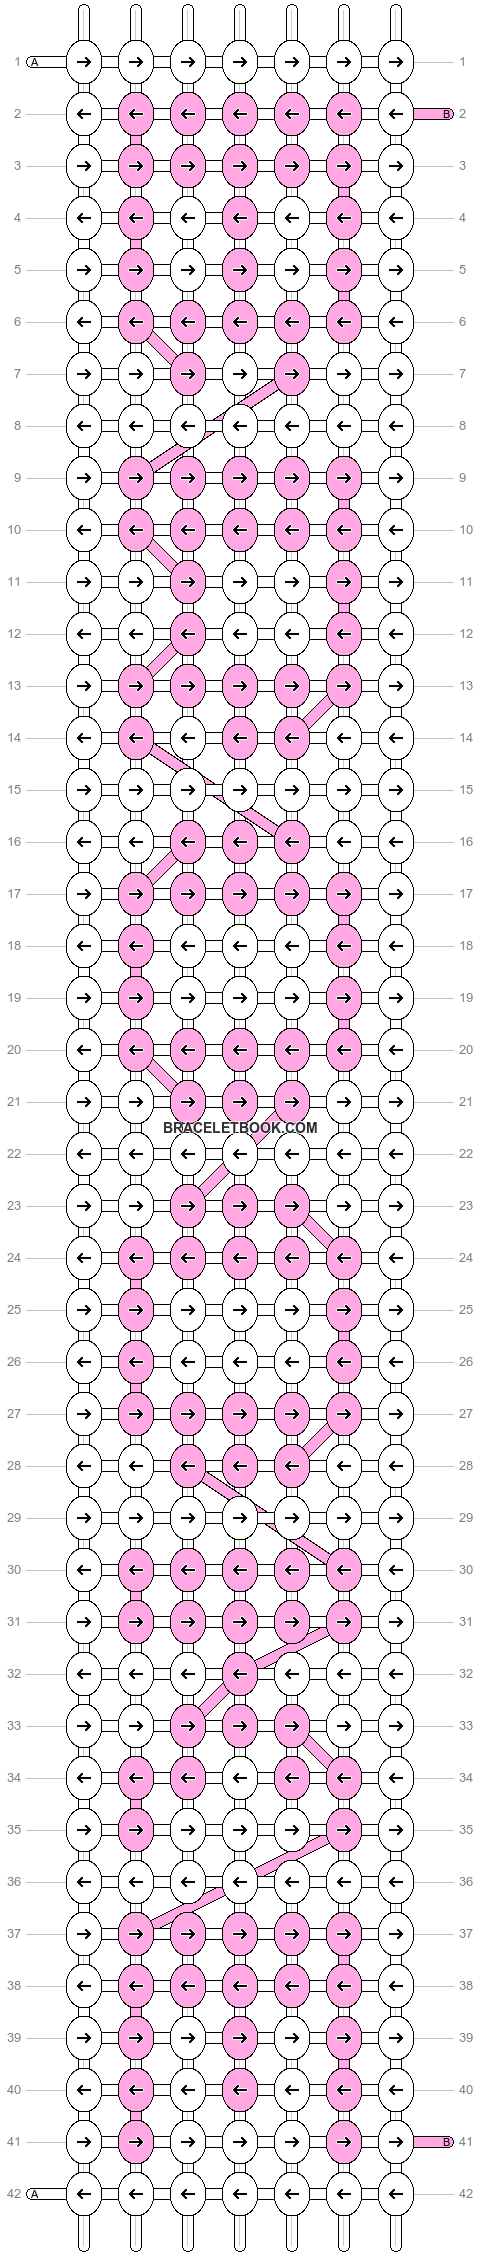 Alpha pattern #5242 variation #128750 pattern